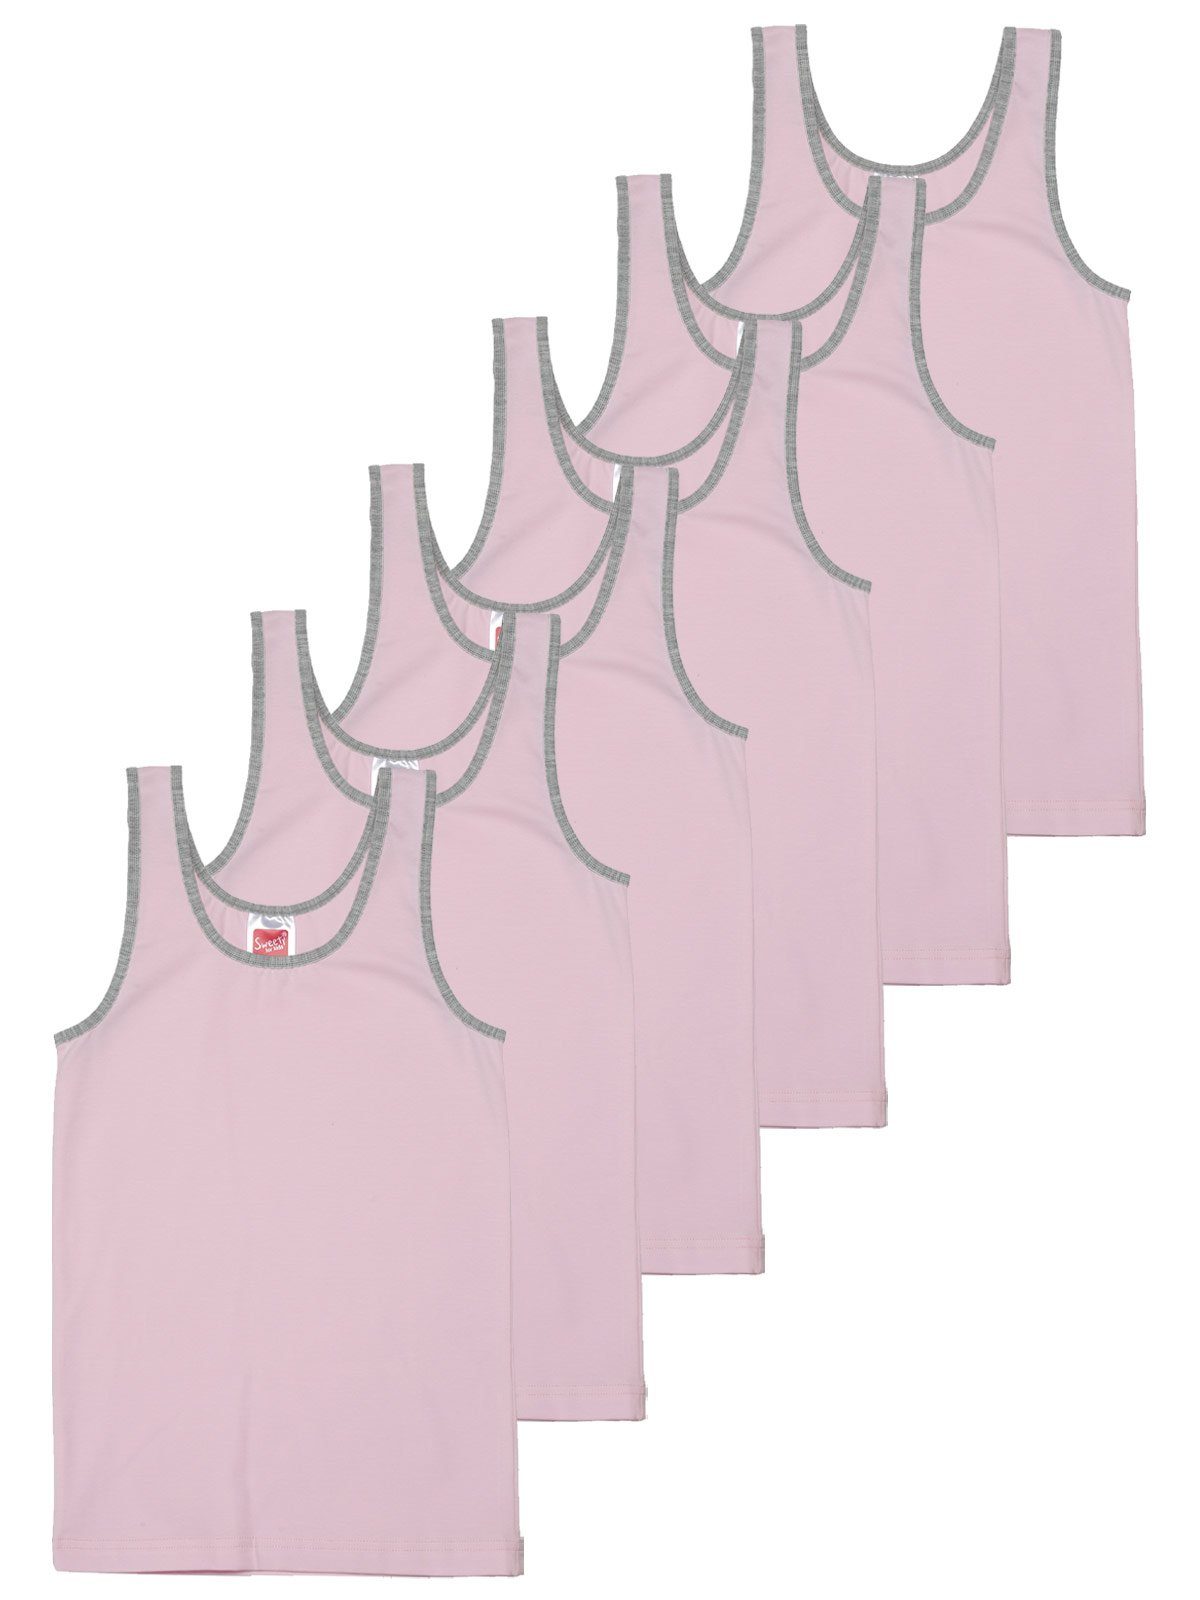 Single Unterhemd hohe Sparpack 6-St) Sweety Unterhemd Kids helles Markenqualität for Mädchen 6er (Spar-Set, rosa Jersey